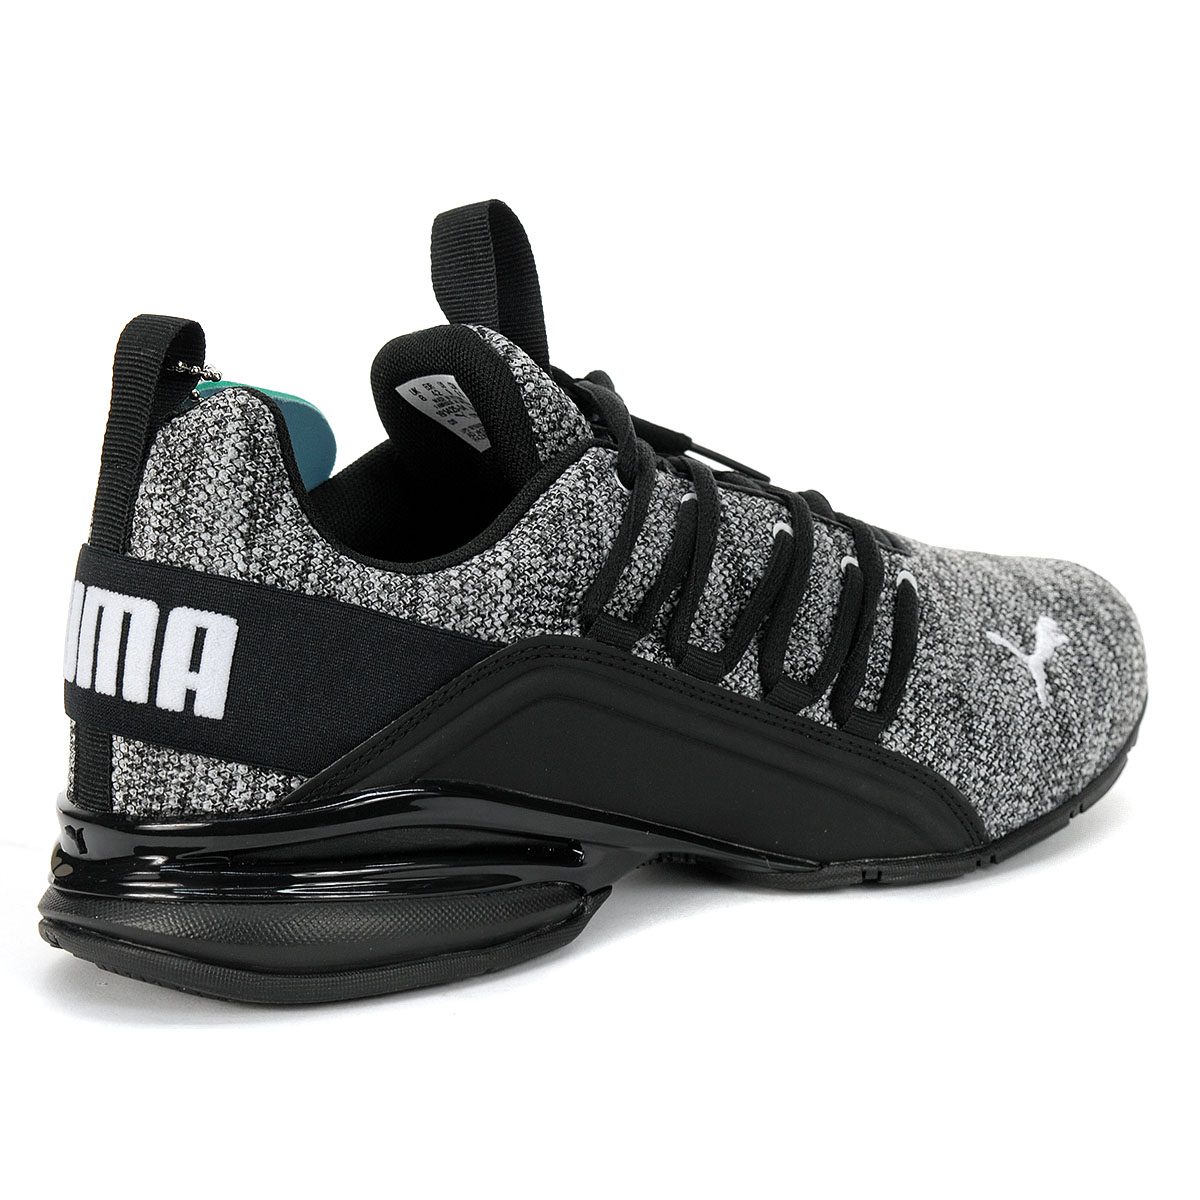 Puma Men's Axelion Black/Grey Knit Running Shoes 19142504